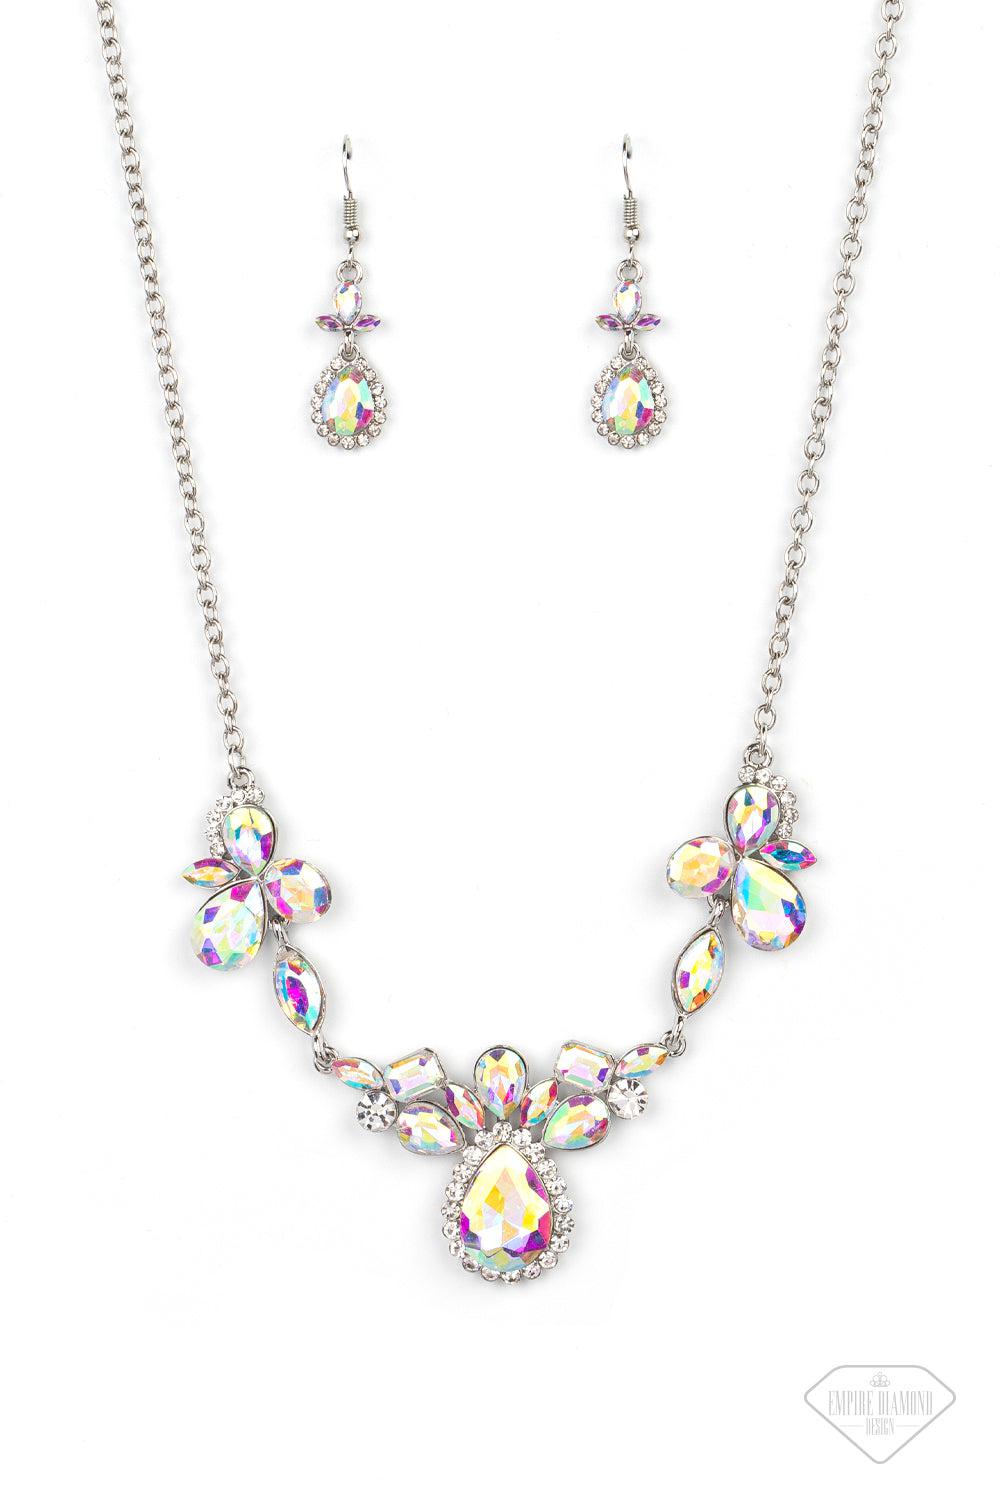 Intergalactic Icon Multi Iridescent Rhinestone Necklace - Paparazzi Accessories- lightbox - CarasShop.com - $5 Jewelry by Cara Jewels